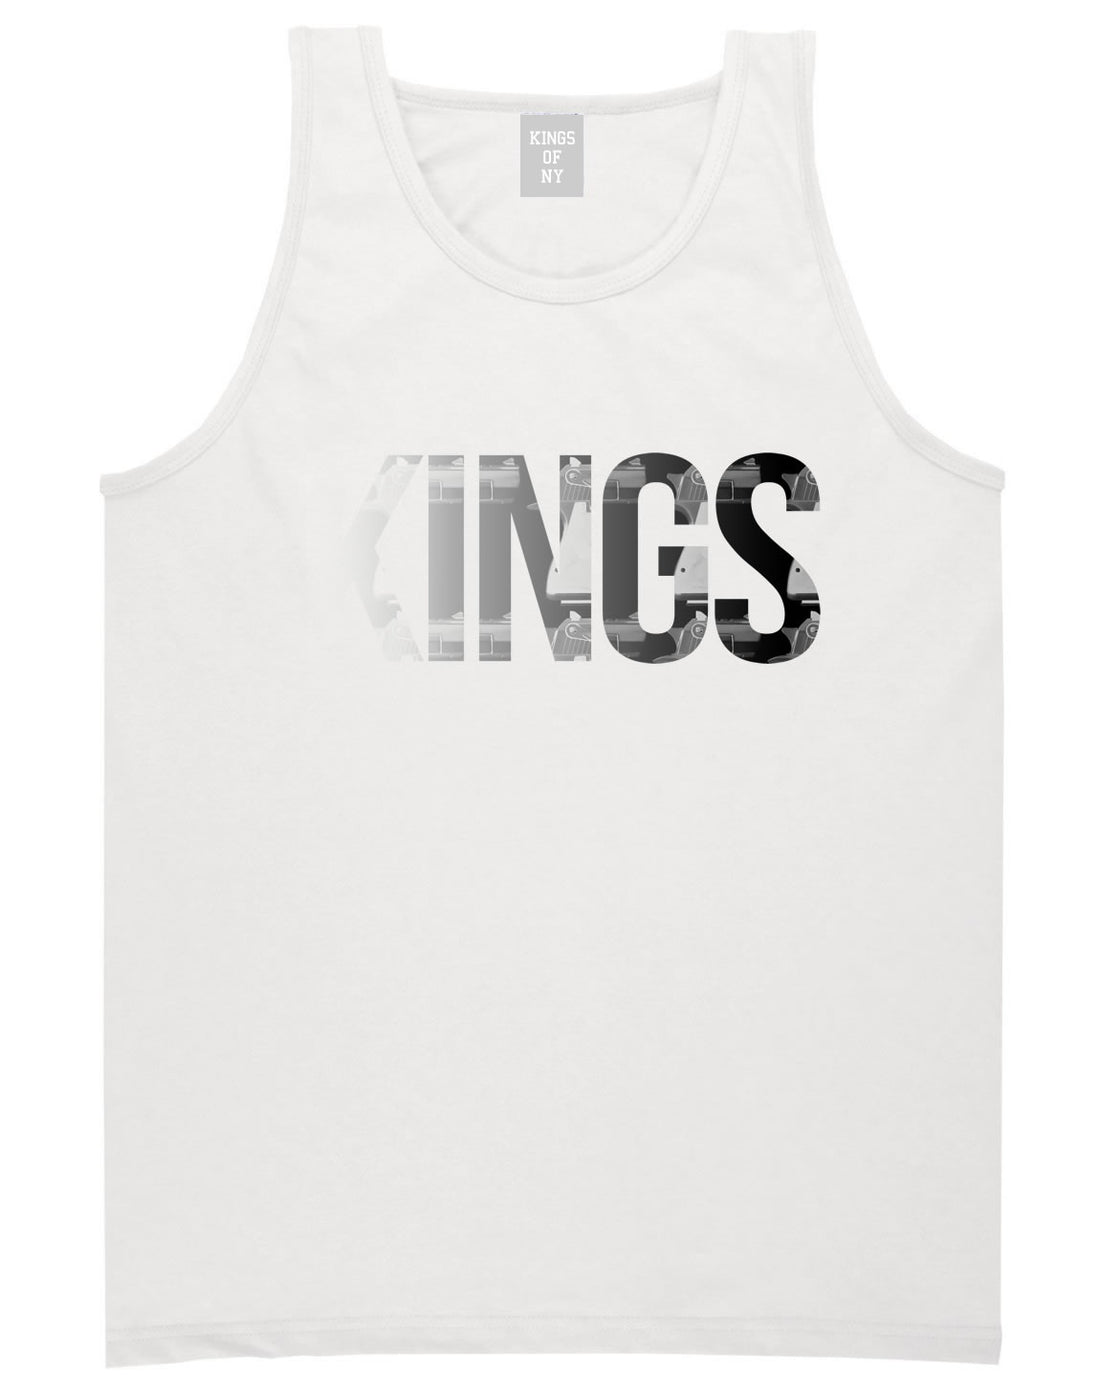 KINGS Gun Pattern Print Tank Top in White by Kings Of NY